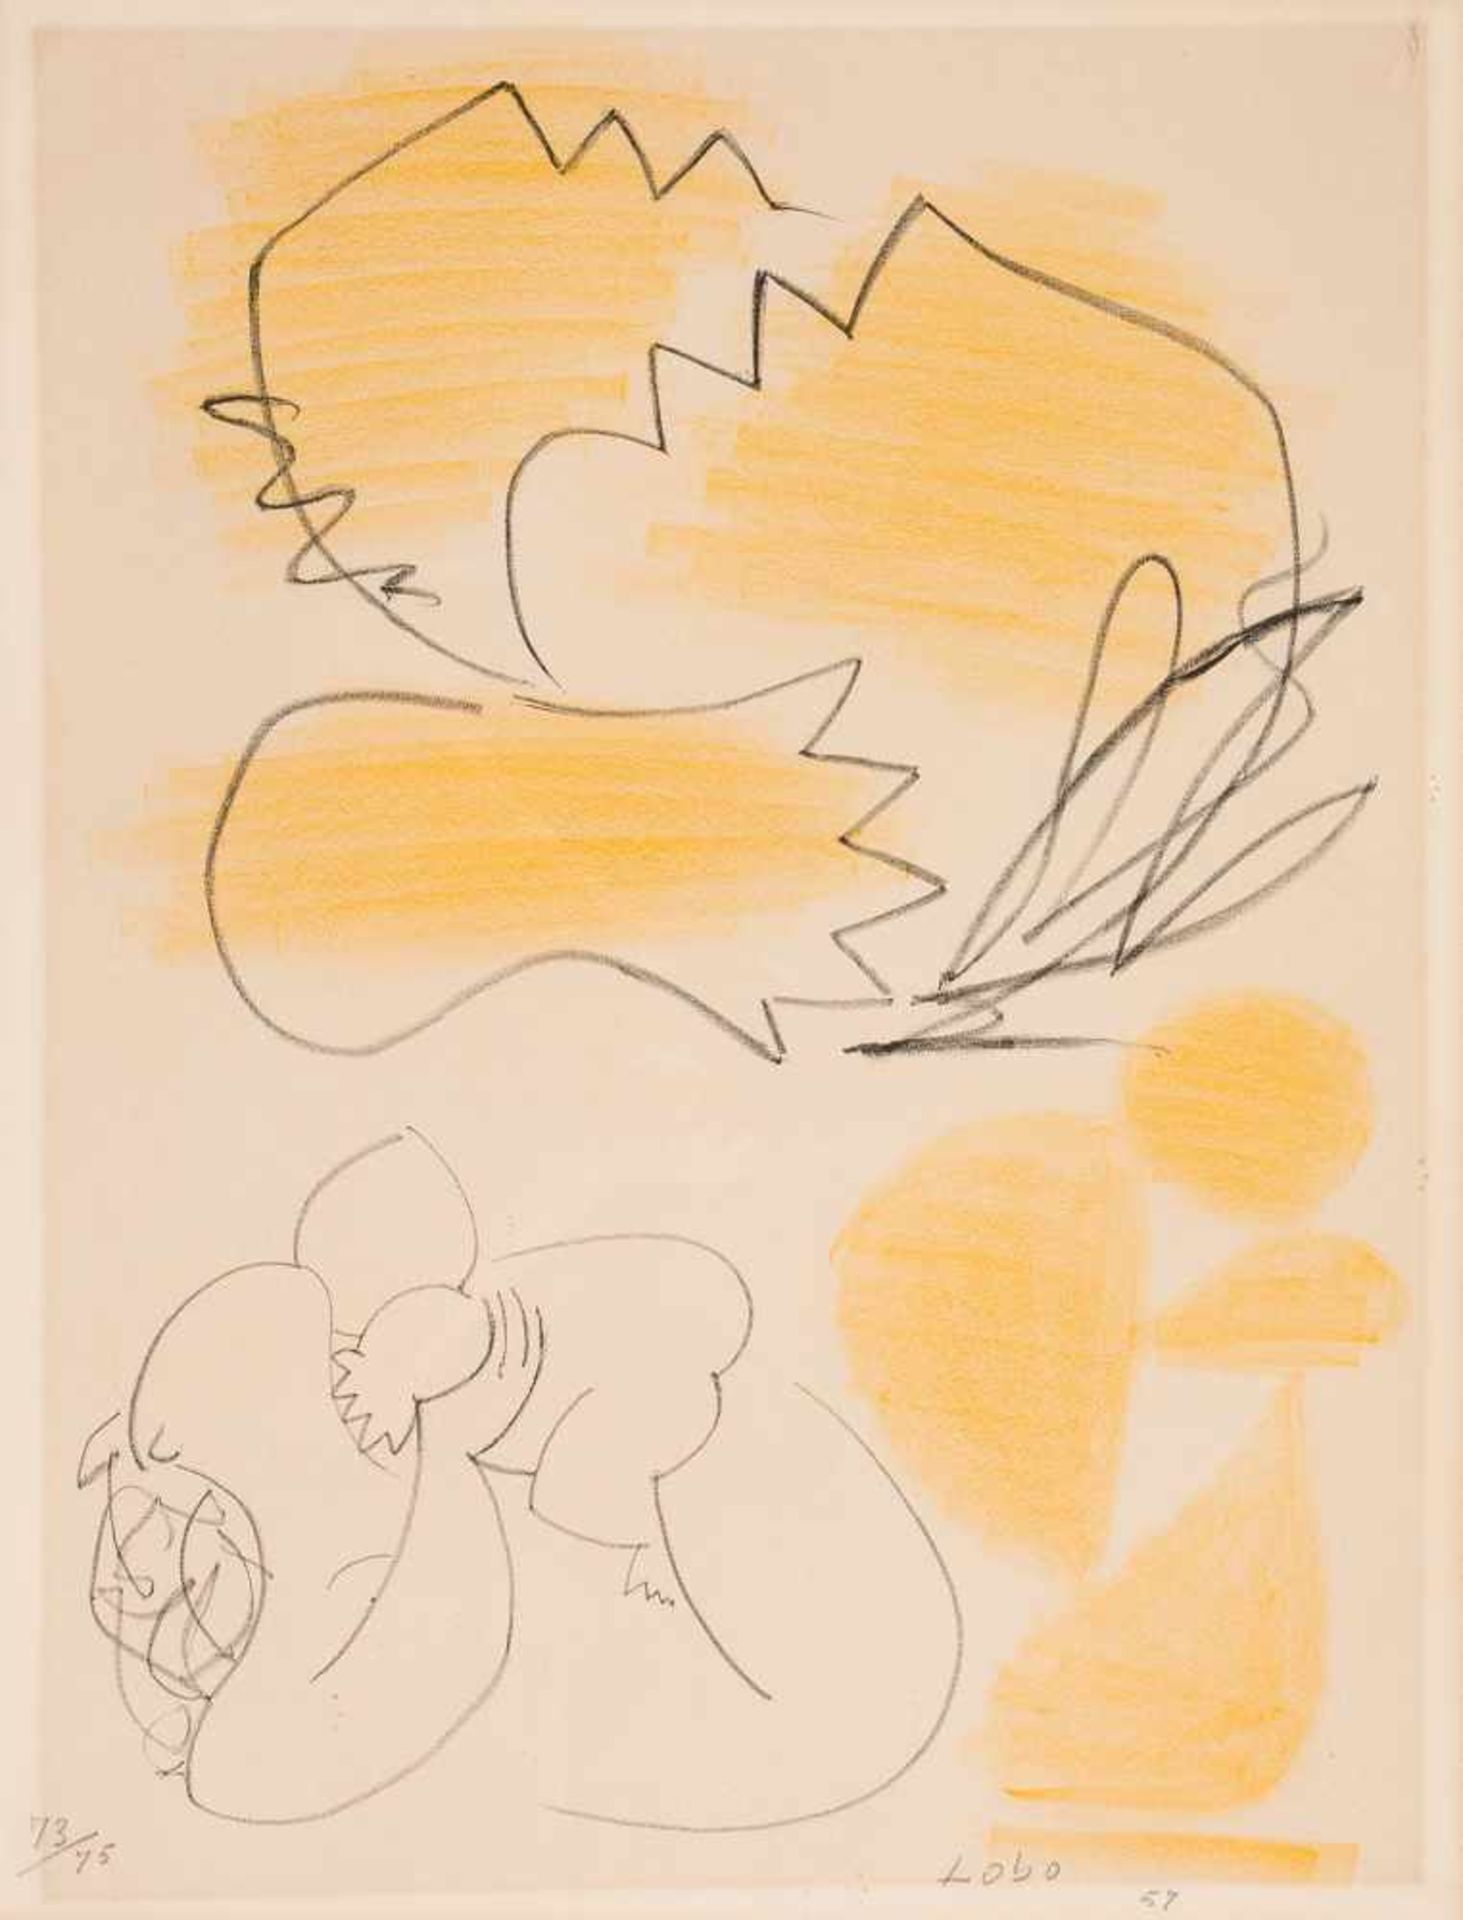 Baltasar Lobo (Cerecinos de Campos, Zamora, 1910 - París, 1993)Grabado firmado a lápiz, fechado en